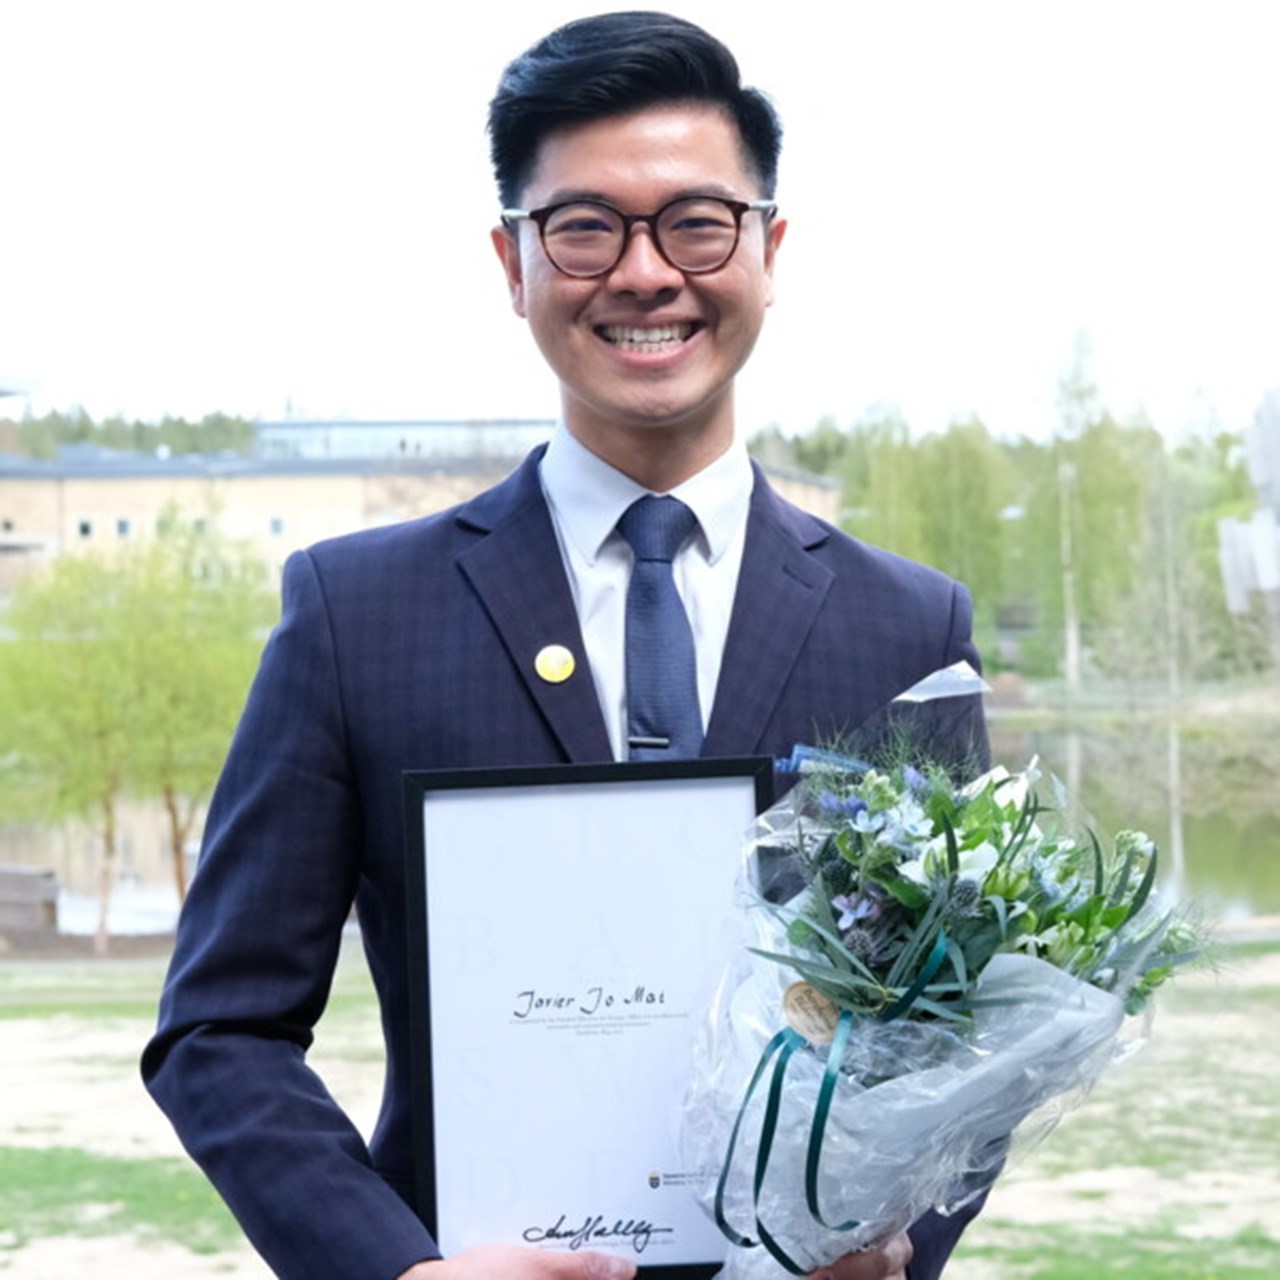 Javier Jo Mai, Umeå University's Global Swede 2020, with his diploma. 